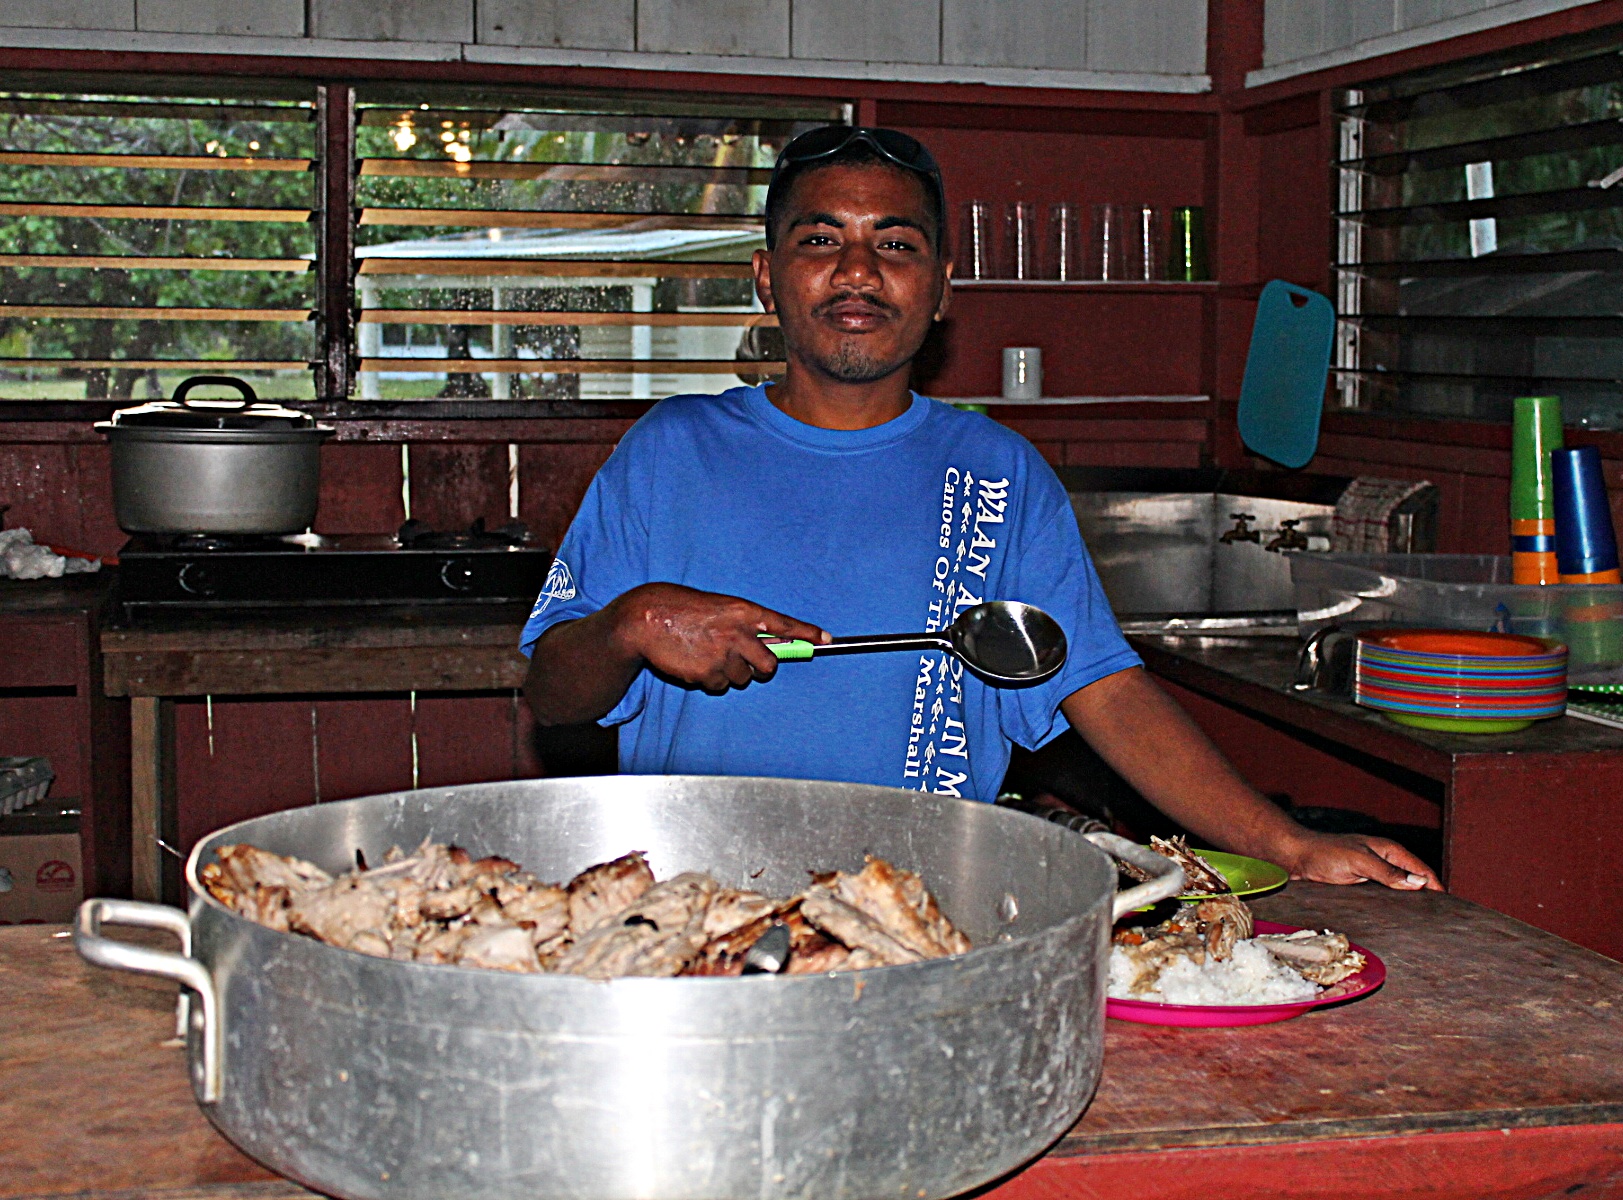 NTC Trainee Darrell Harold takes his turn at cooking. Photo: Suemina Bohanny